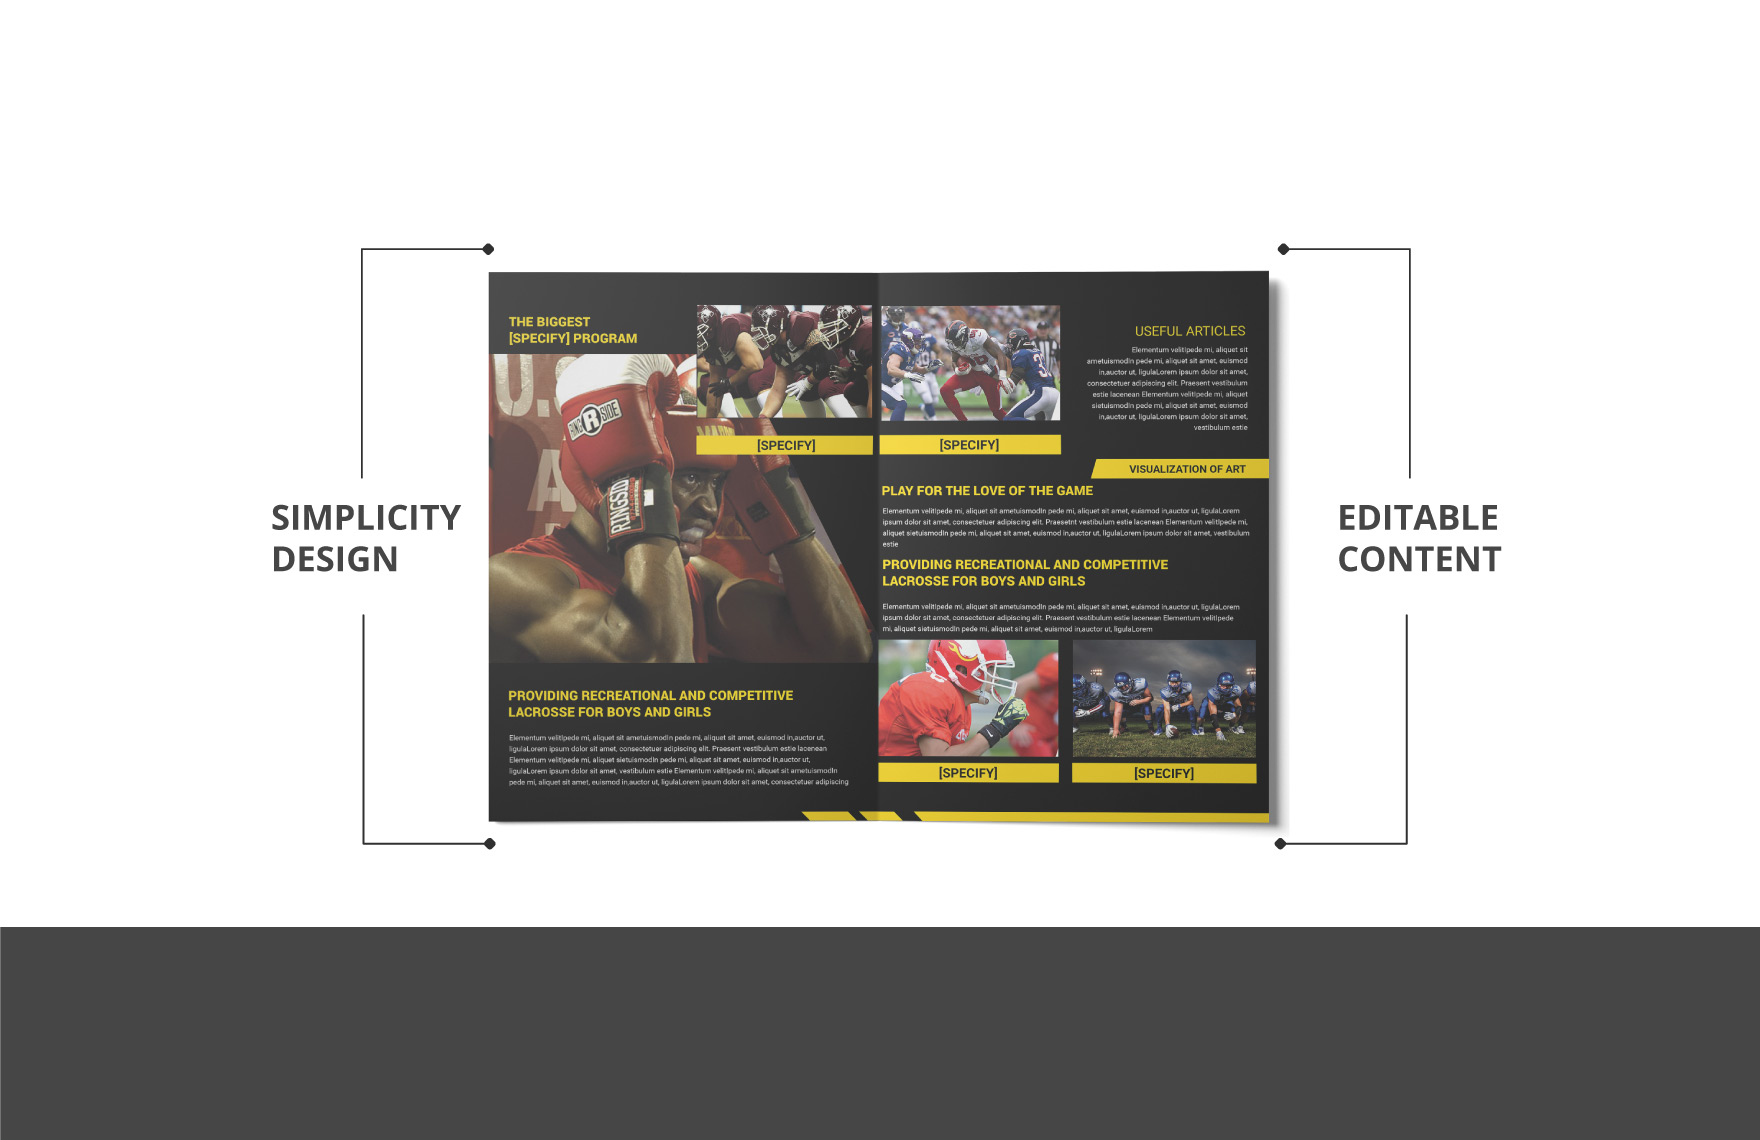 Sports Bi-Fold Brochure Template